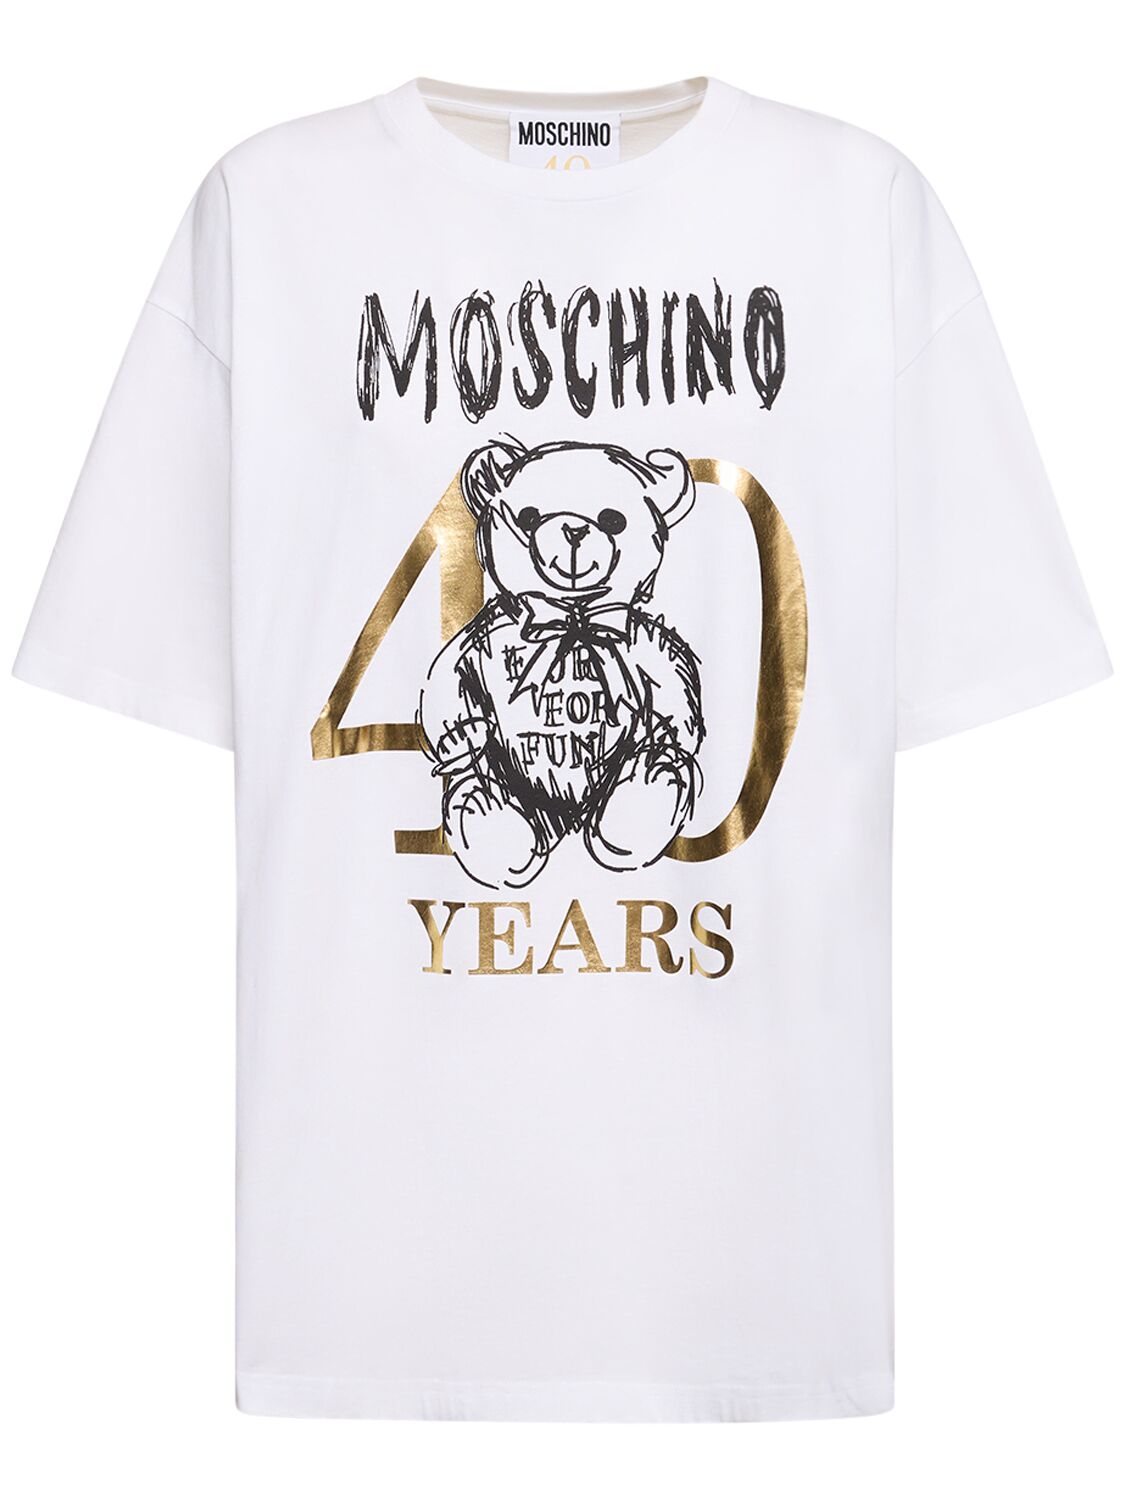 T-shirt Aus Baumwolljersey Mit Logo - MOSCHINO - Modalova